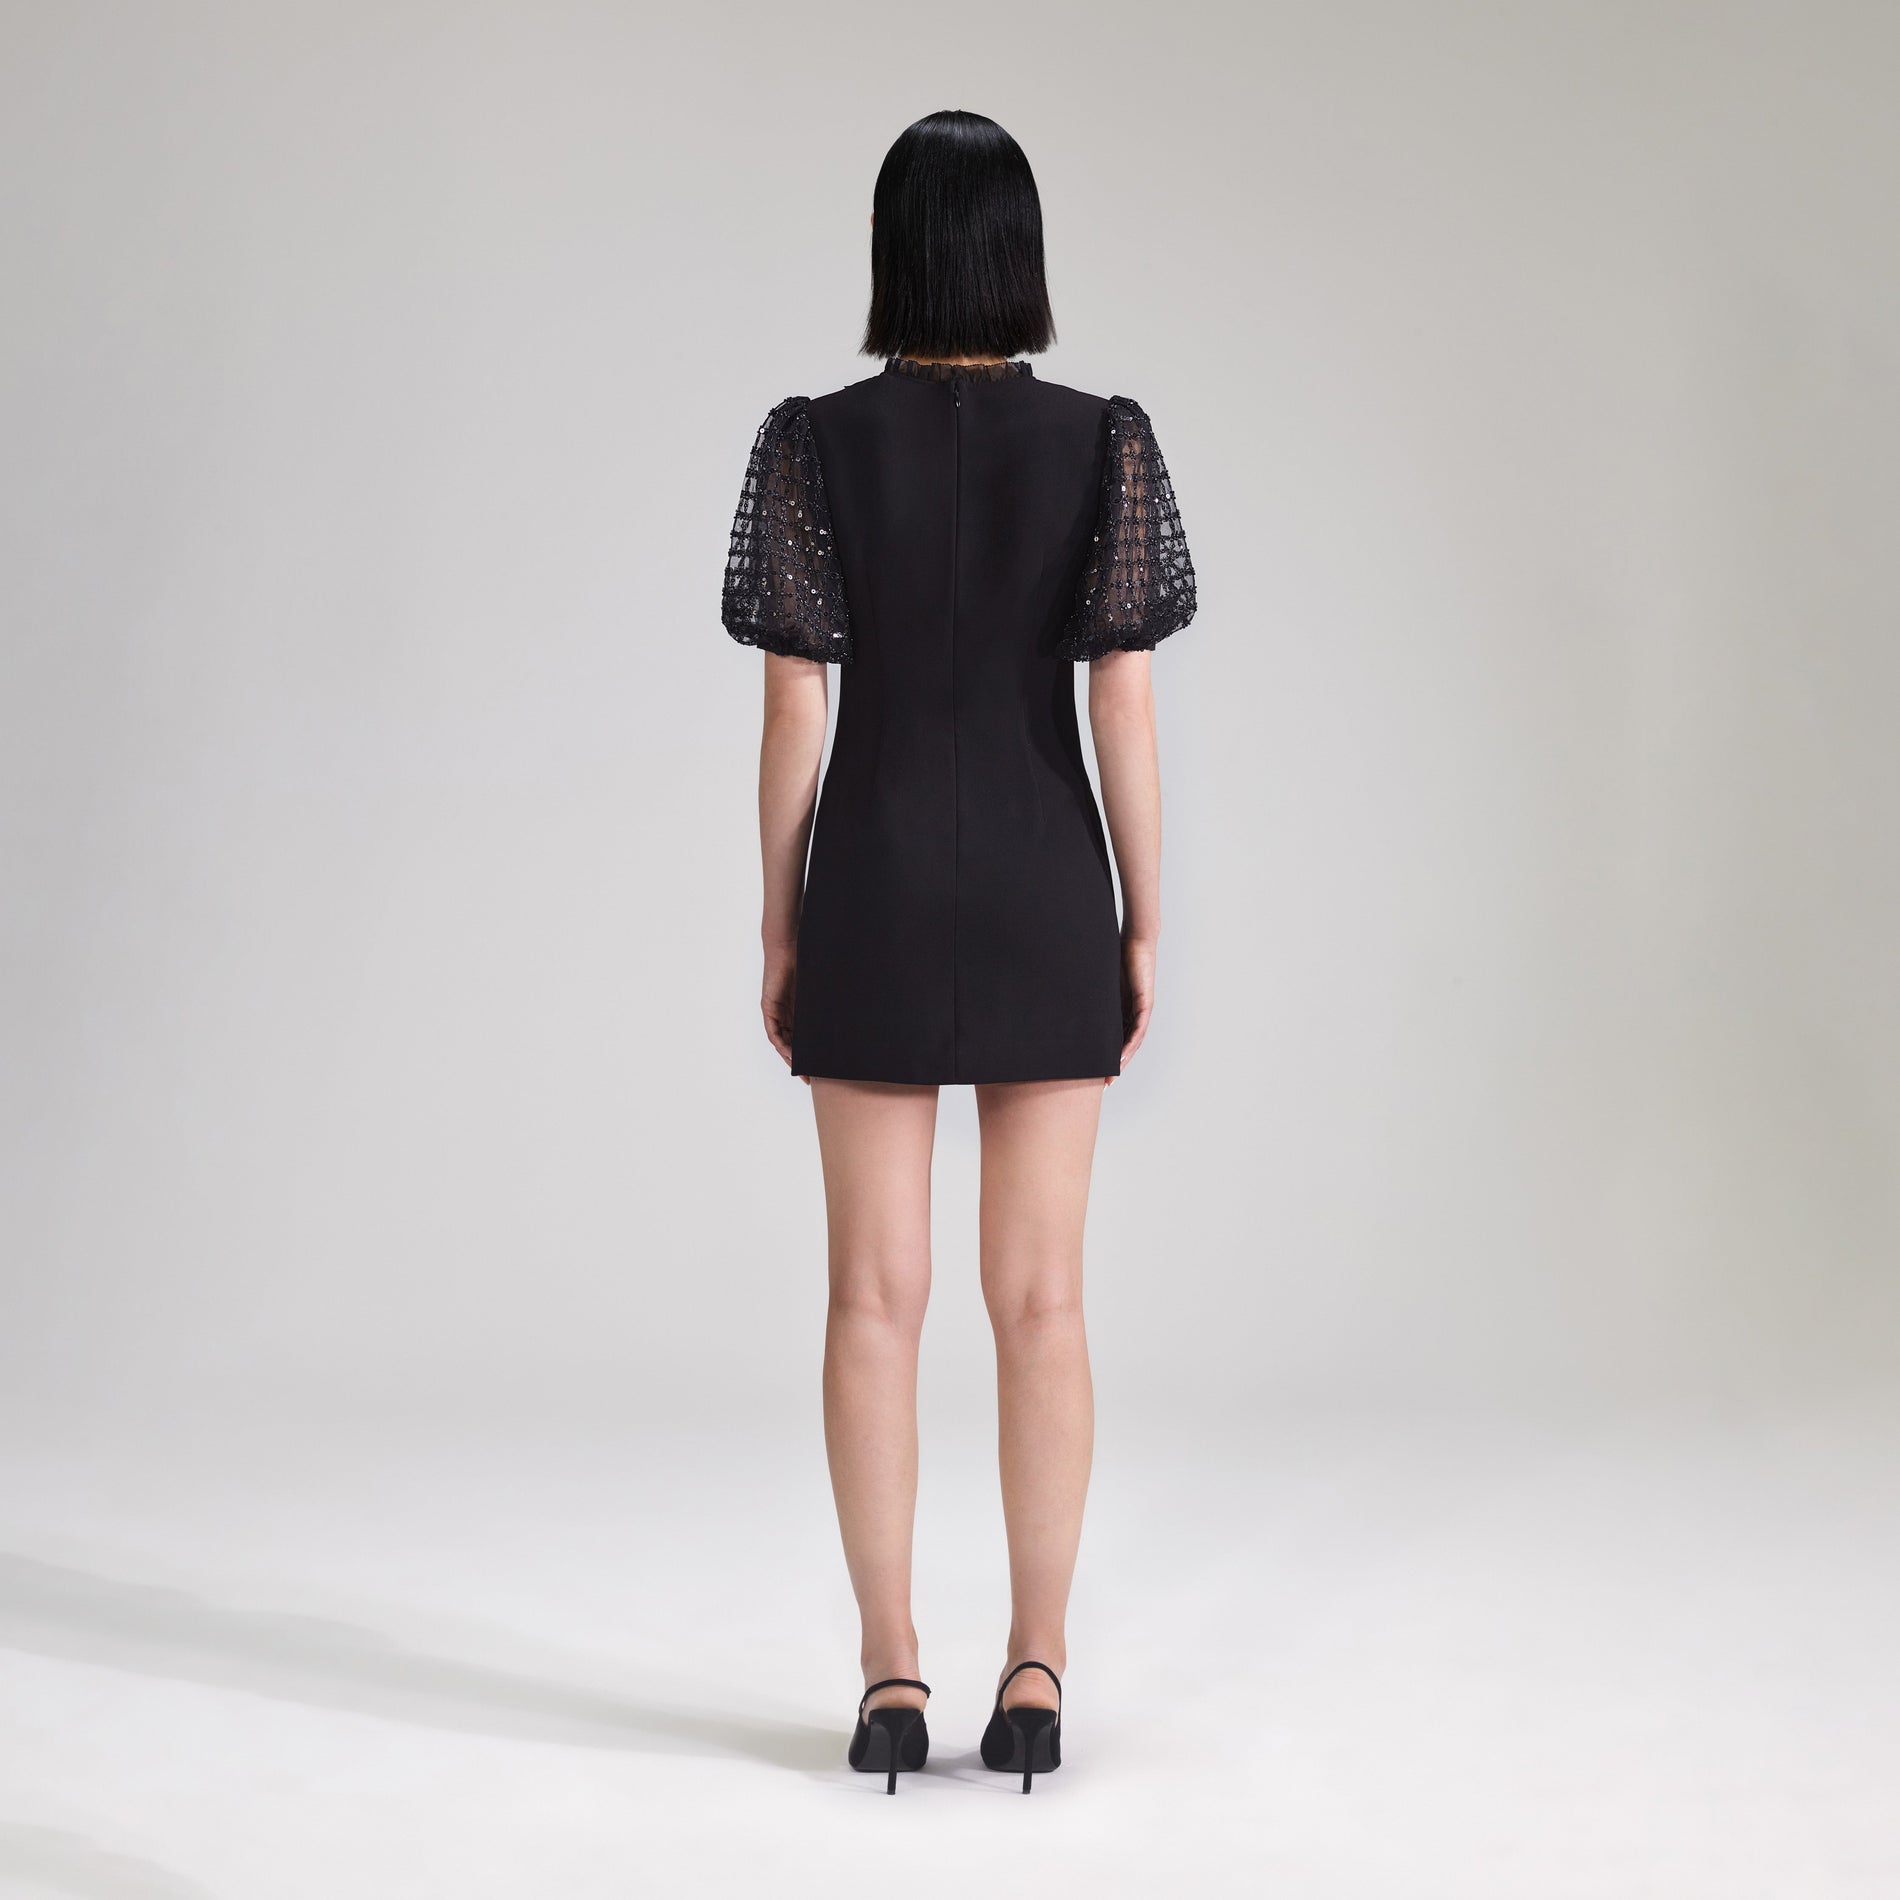 A woman wearing the Black Crepe Puff Sleeve Mini Dress